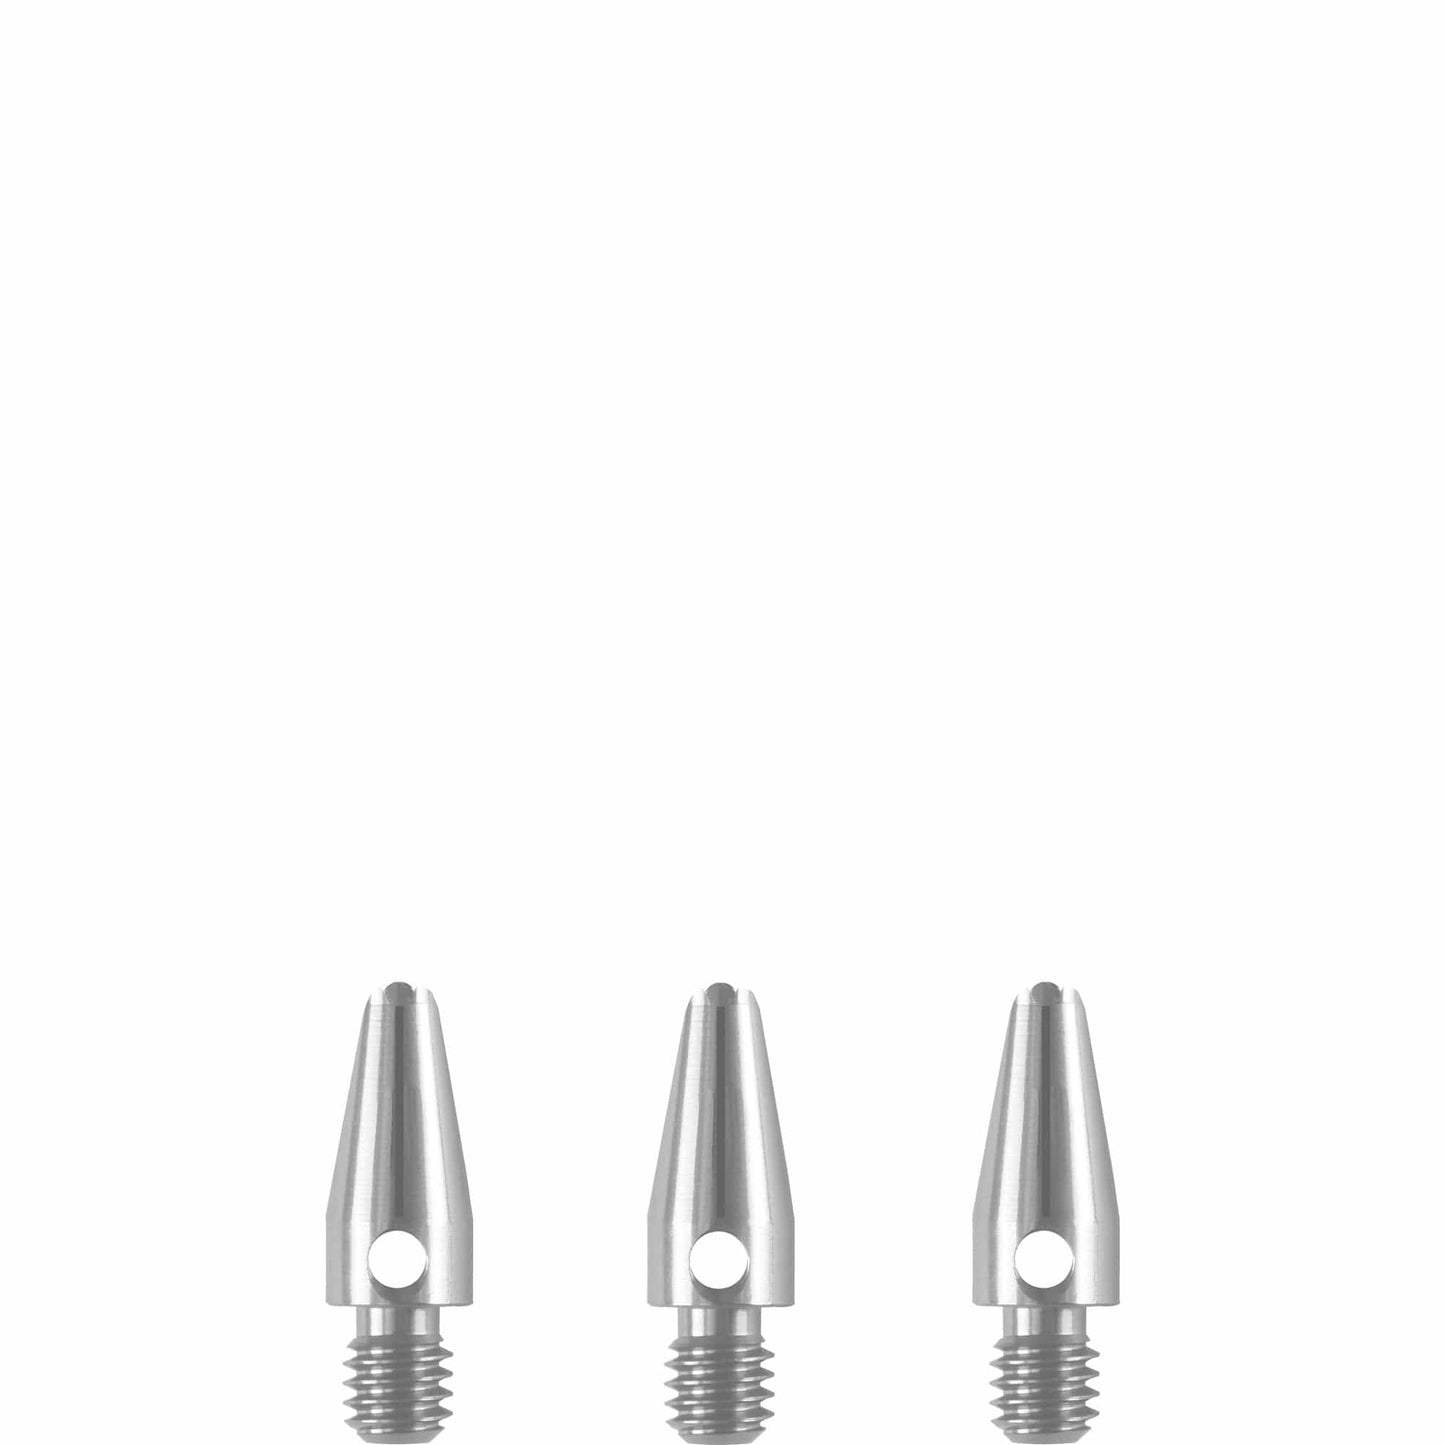 Designa Aluminium Shafts - Metal Dart Stems - Silver Micro